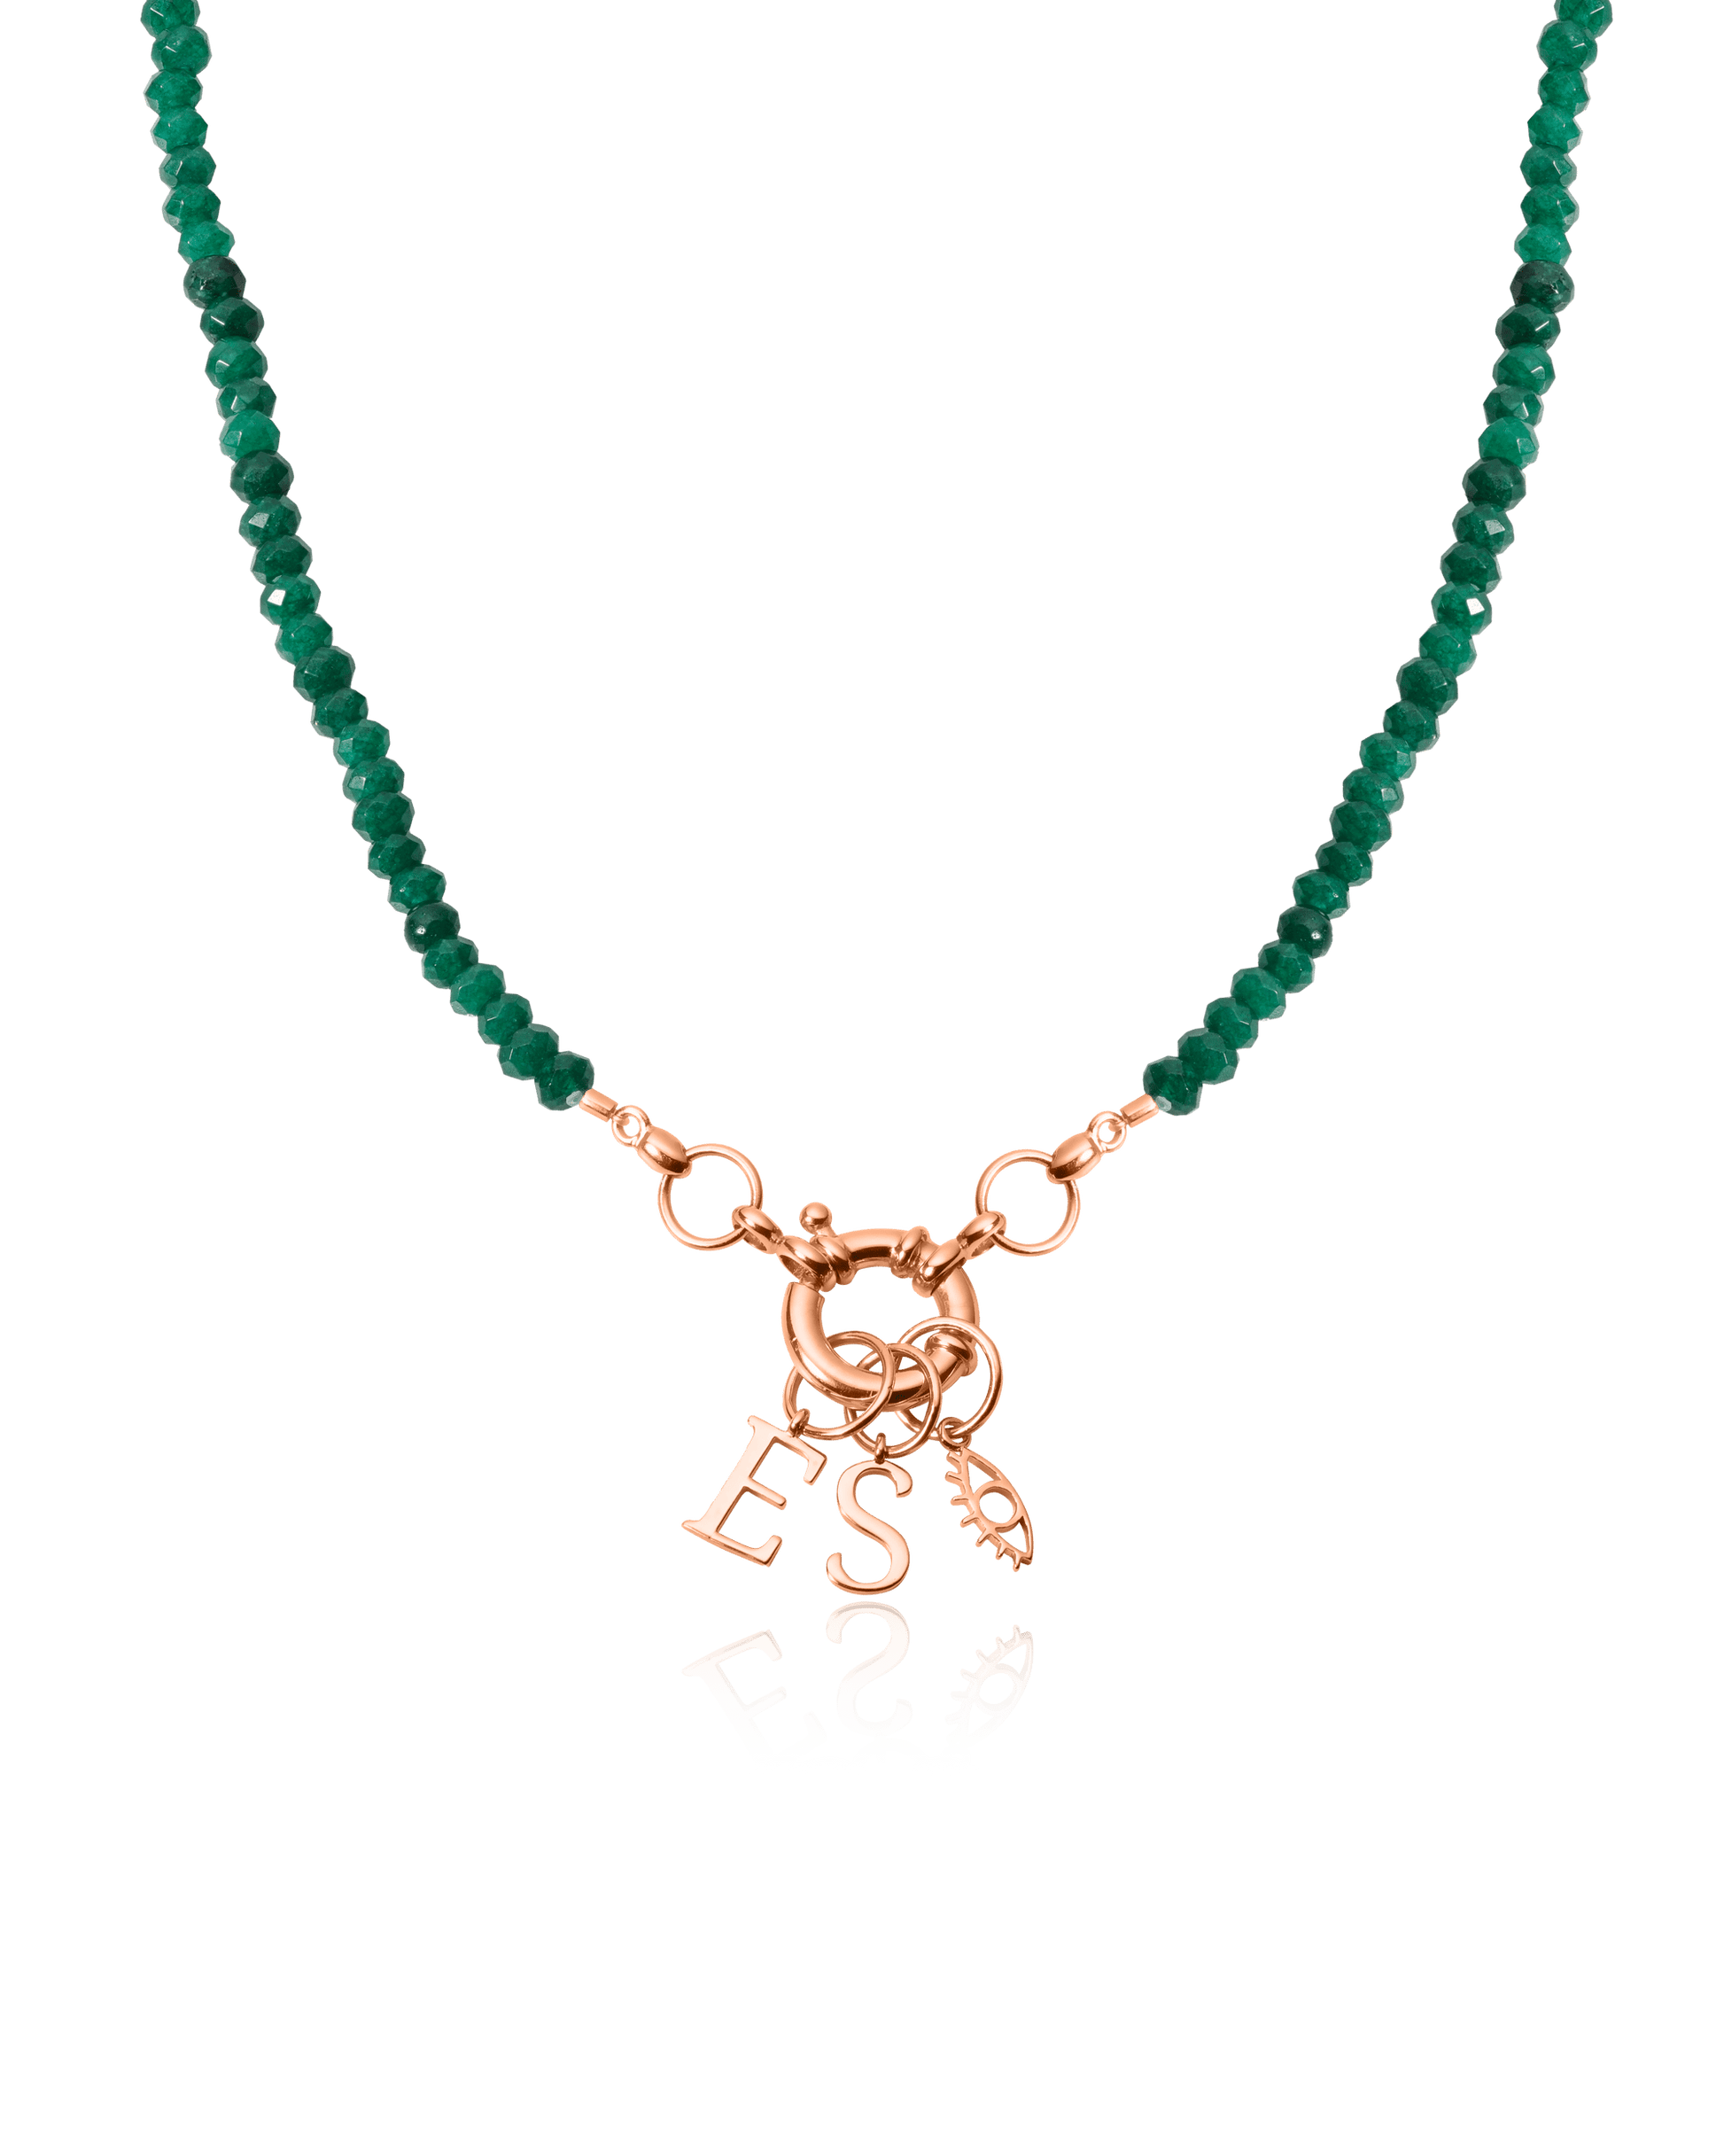 Pearl Charm Lock Necklace - 18K Rose Vermeil Necklaces magal-dev Green Jade Gemstones 1 Charm 16"